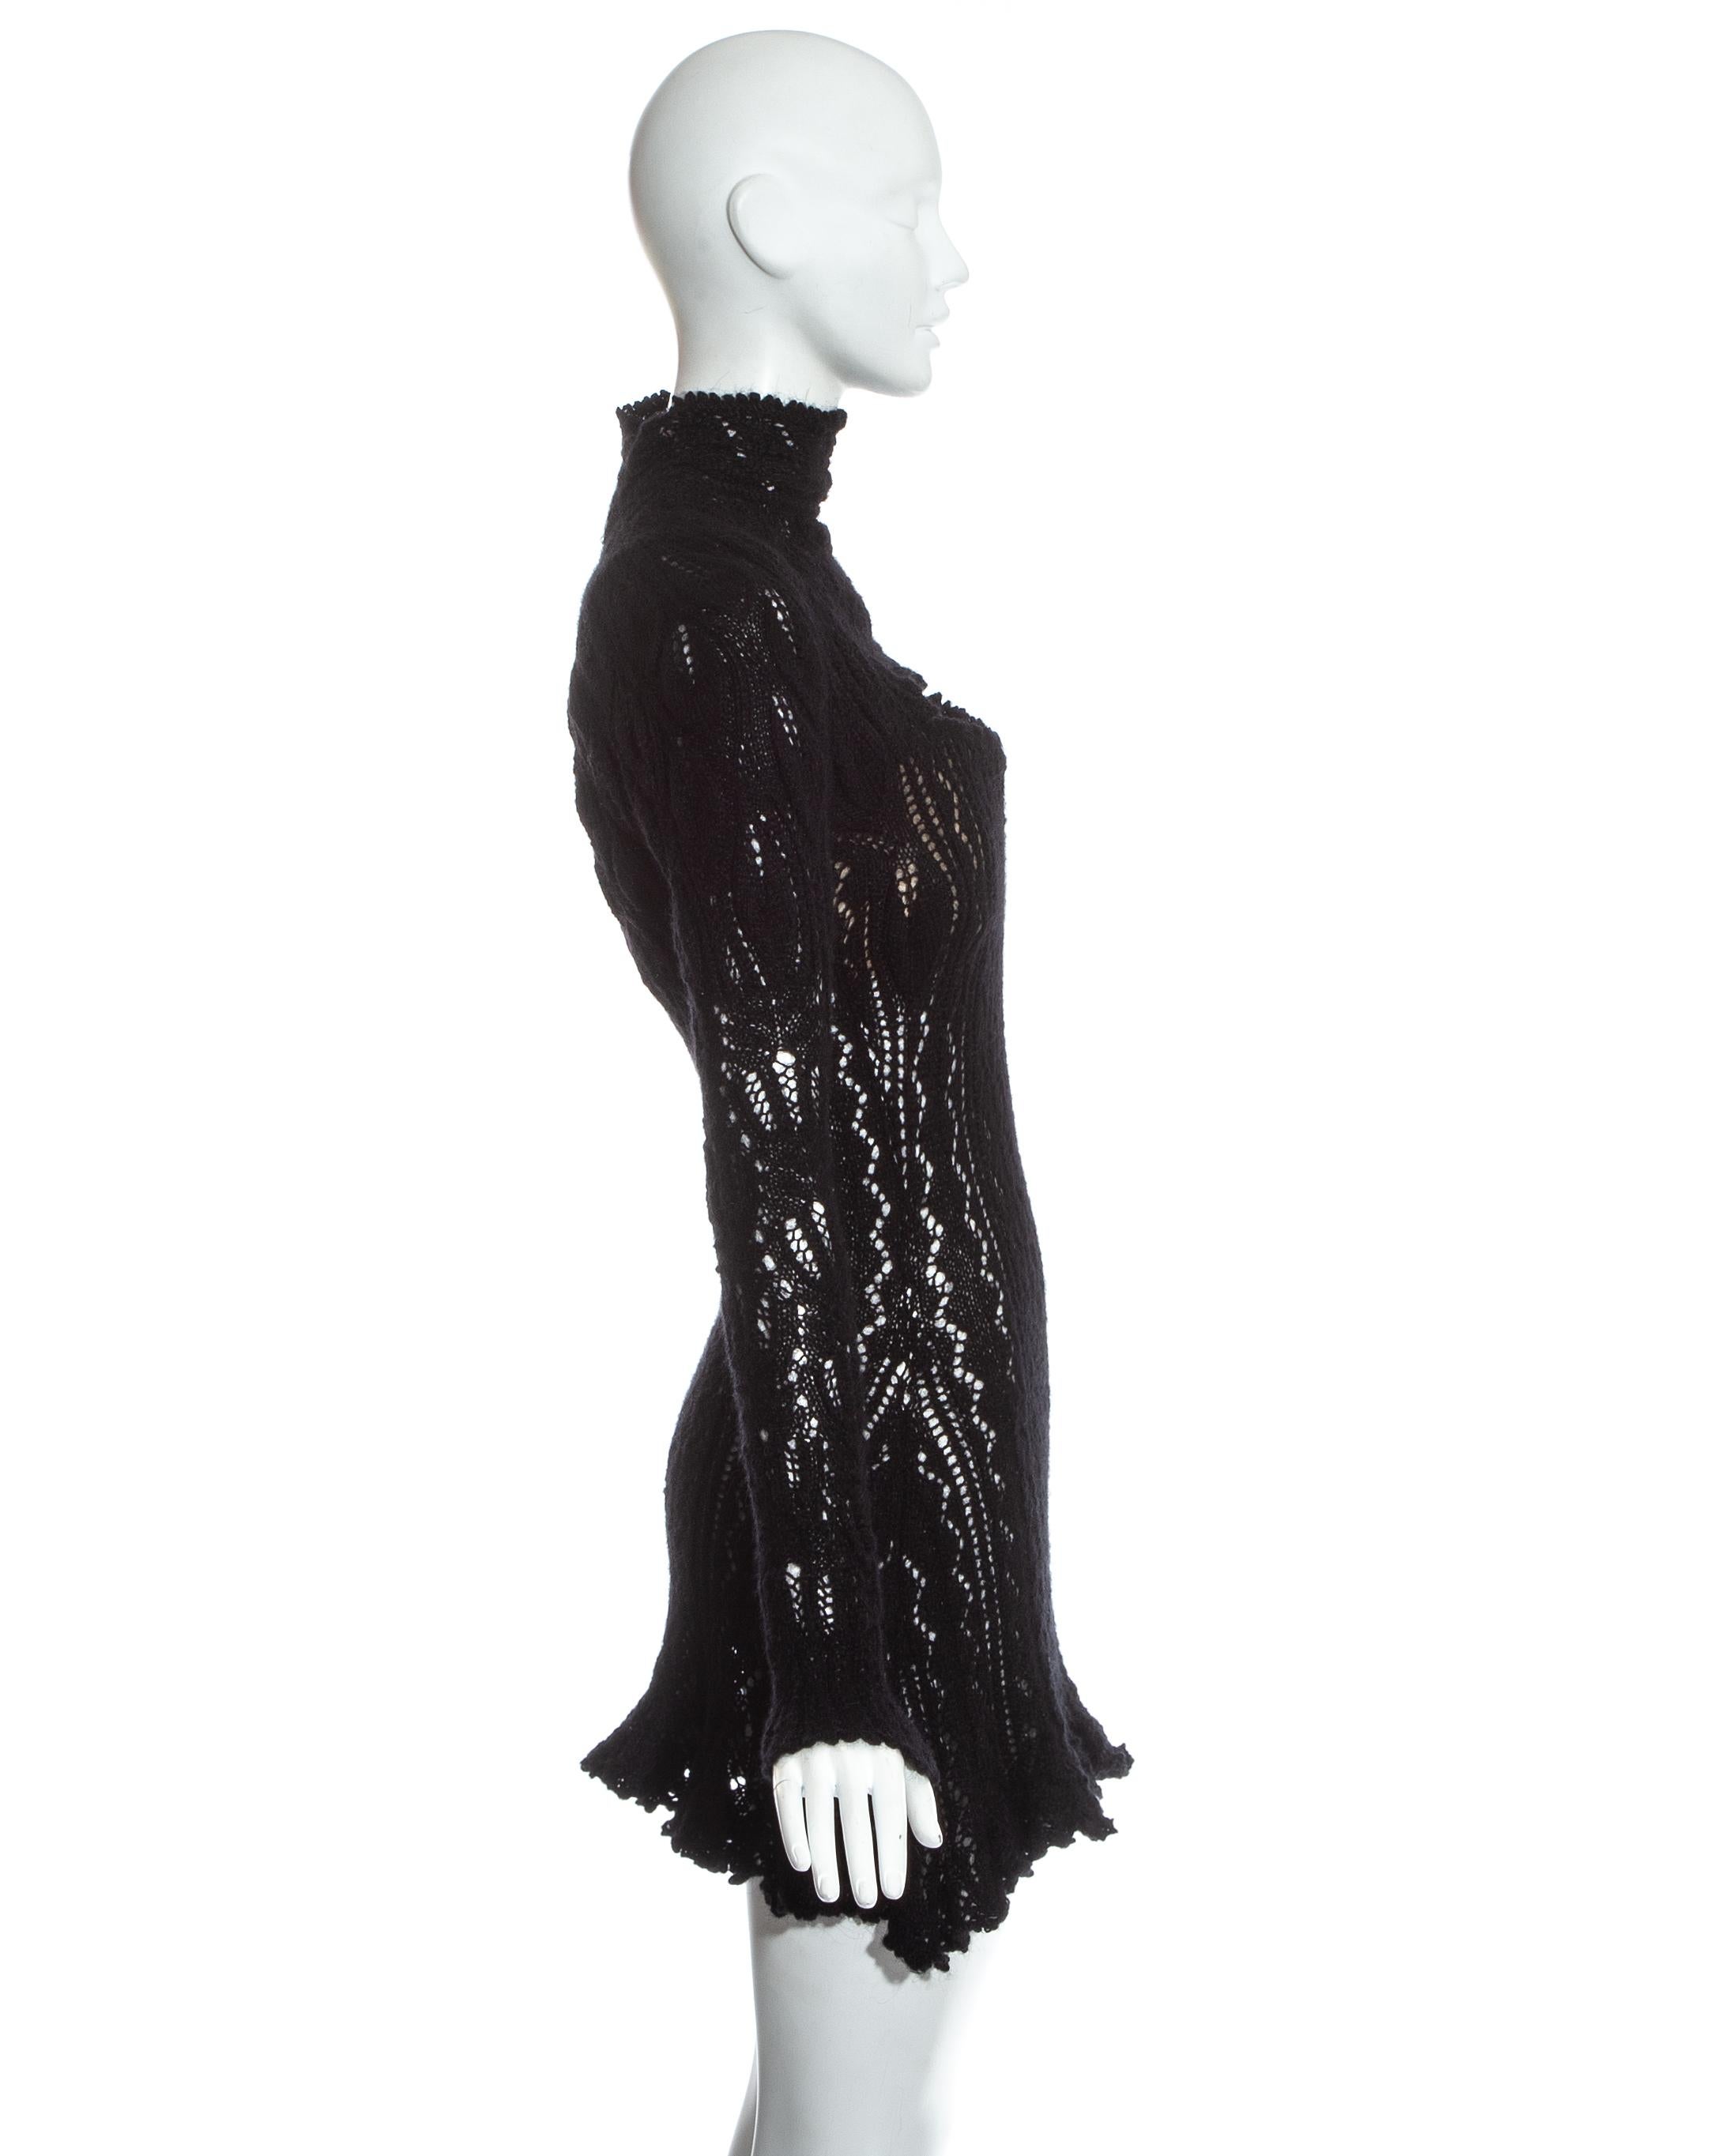 Black Vivienne Westwood black crochet knit corseted mini dress with cut out, fw 1993